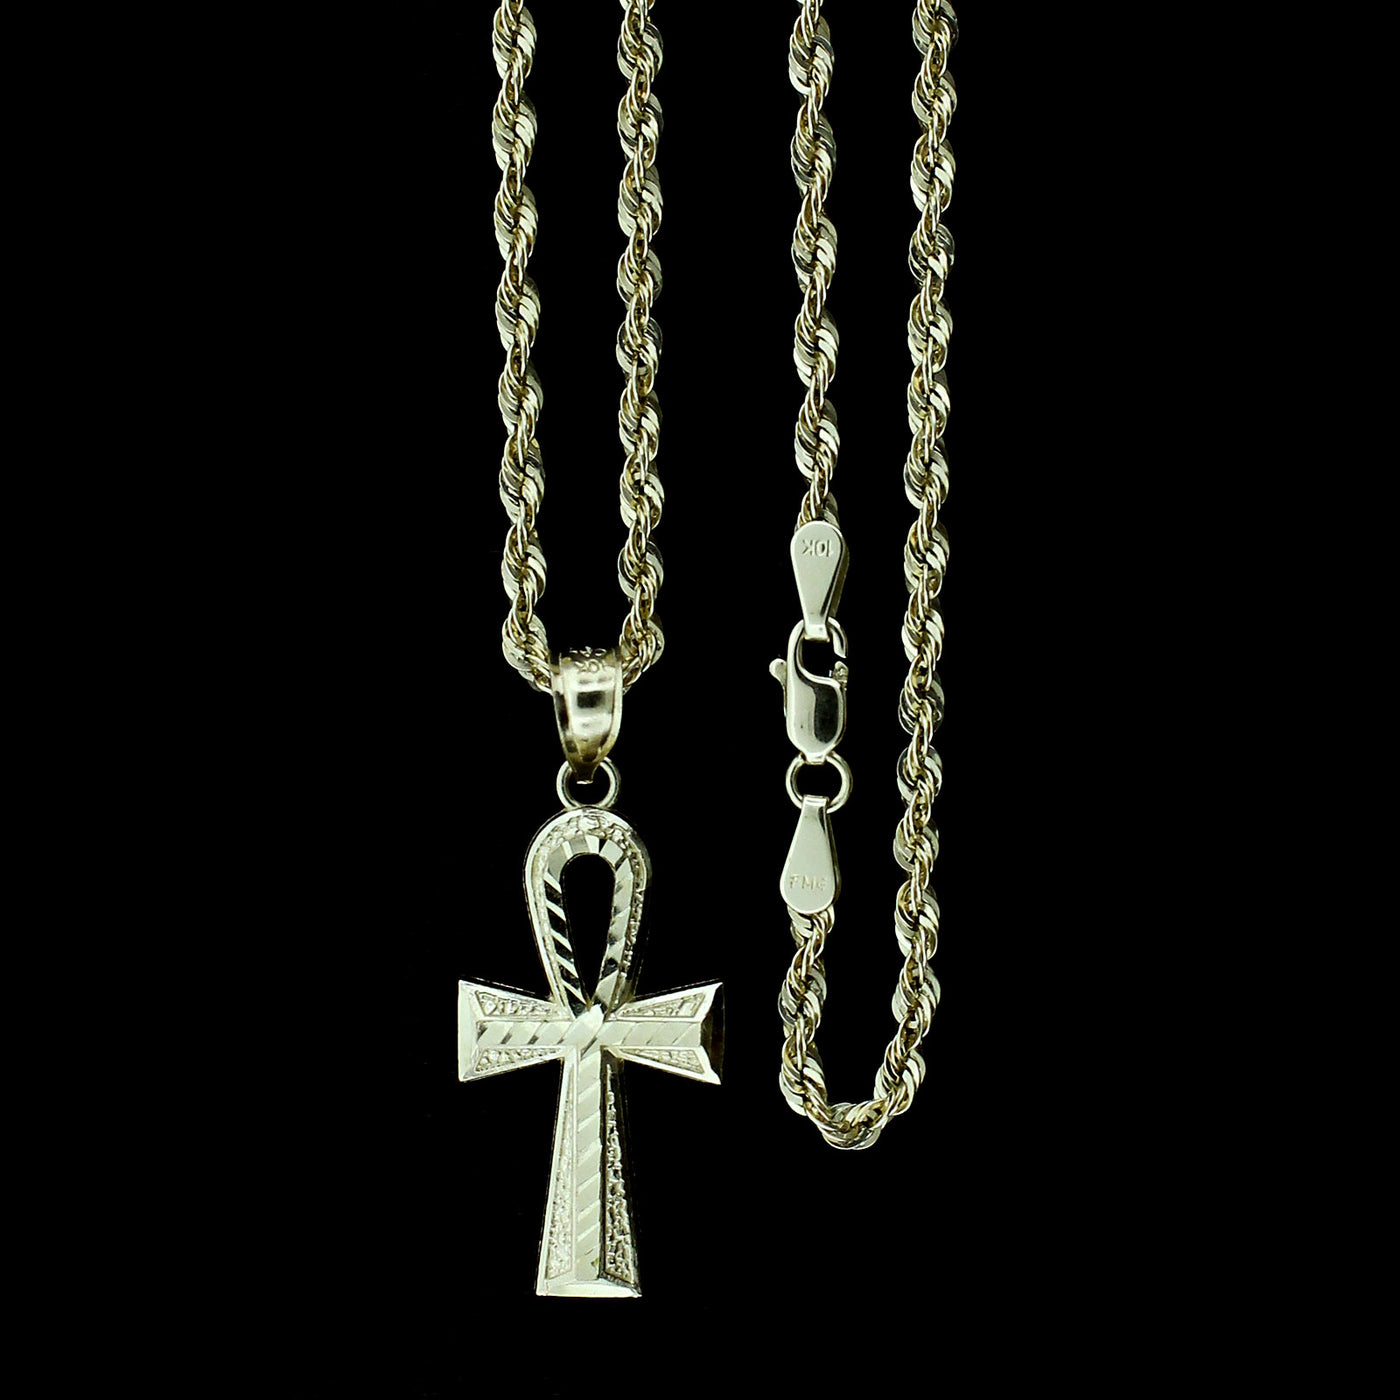 Real 10K Yellow Gold Diamond Cut Medium Egyptian Ankh Cross Pendant & Rope Chain Necklace Set